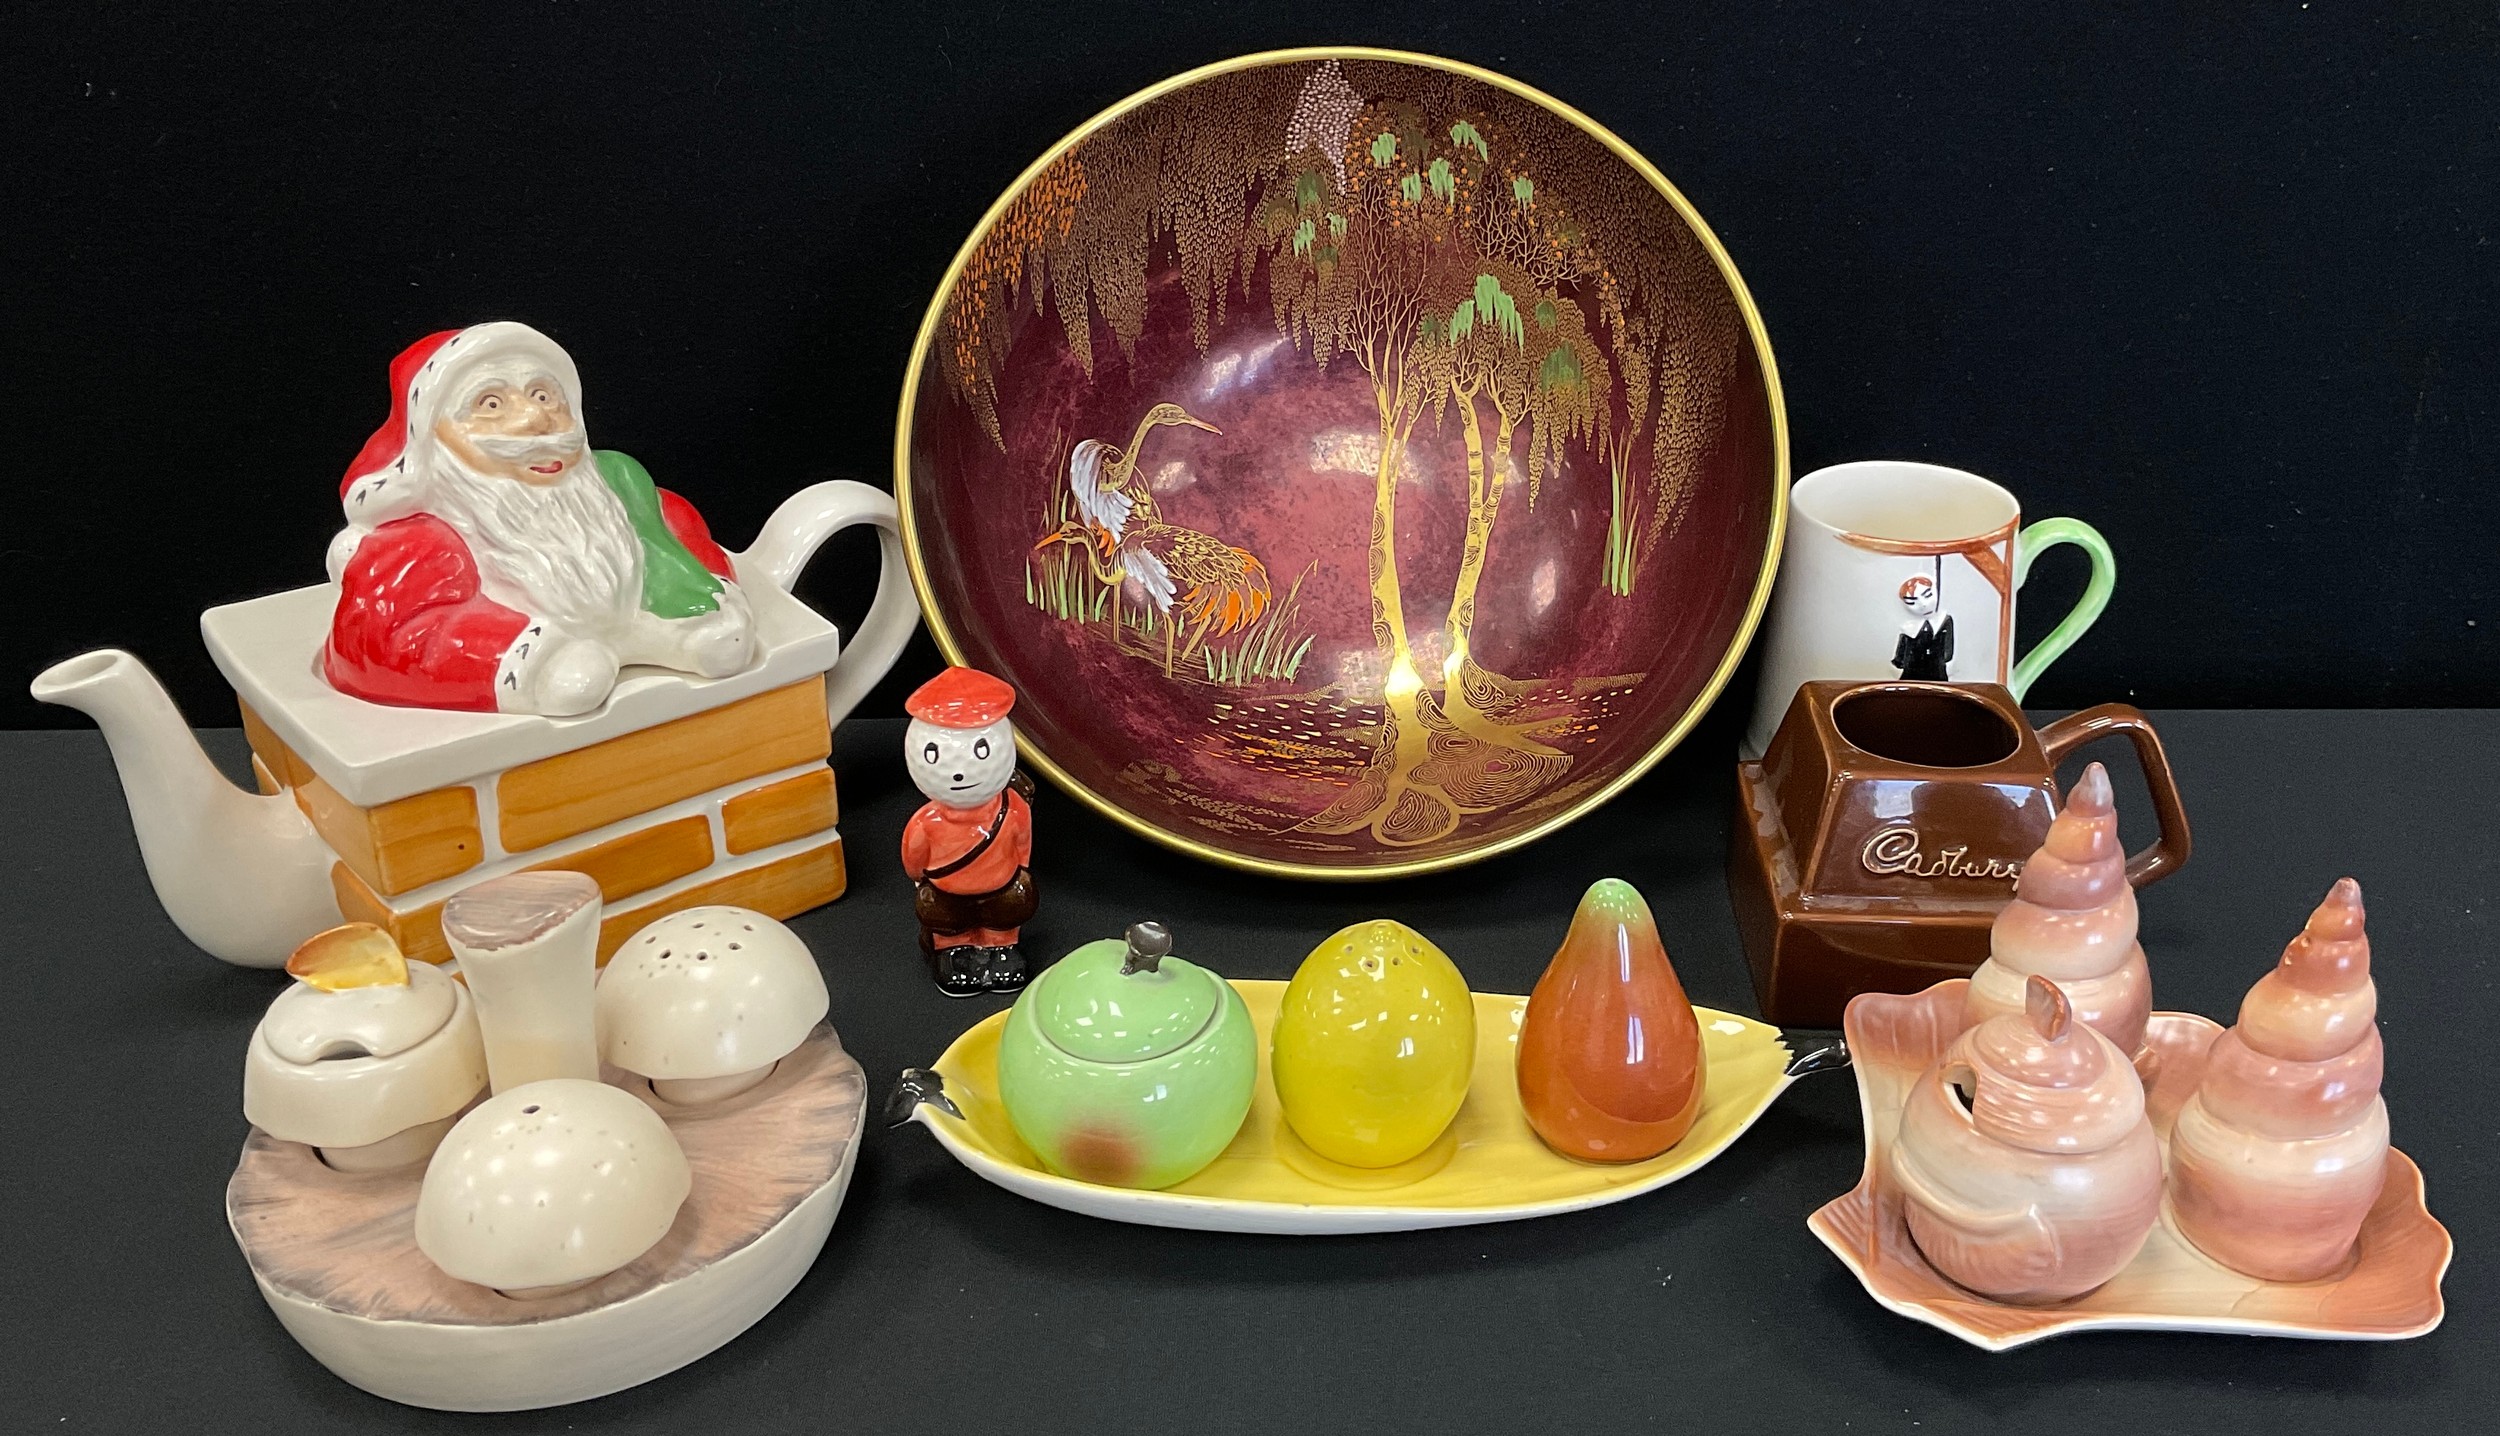 Carltonware - a Rouge Royale fruit bowl, novelty Santa Claus teapot, mushroom and other cruet